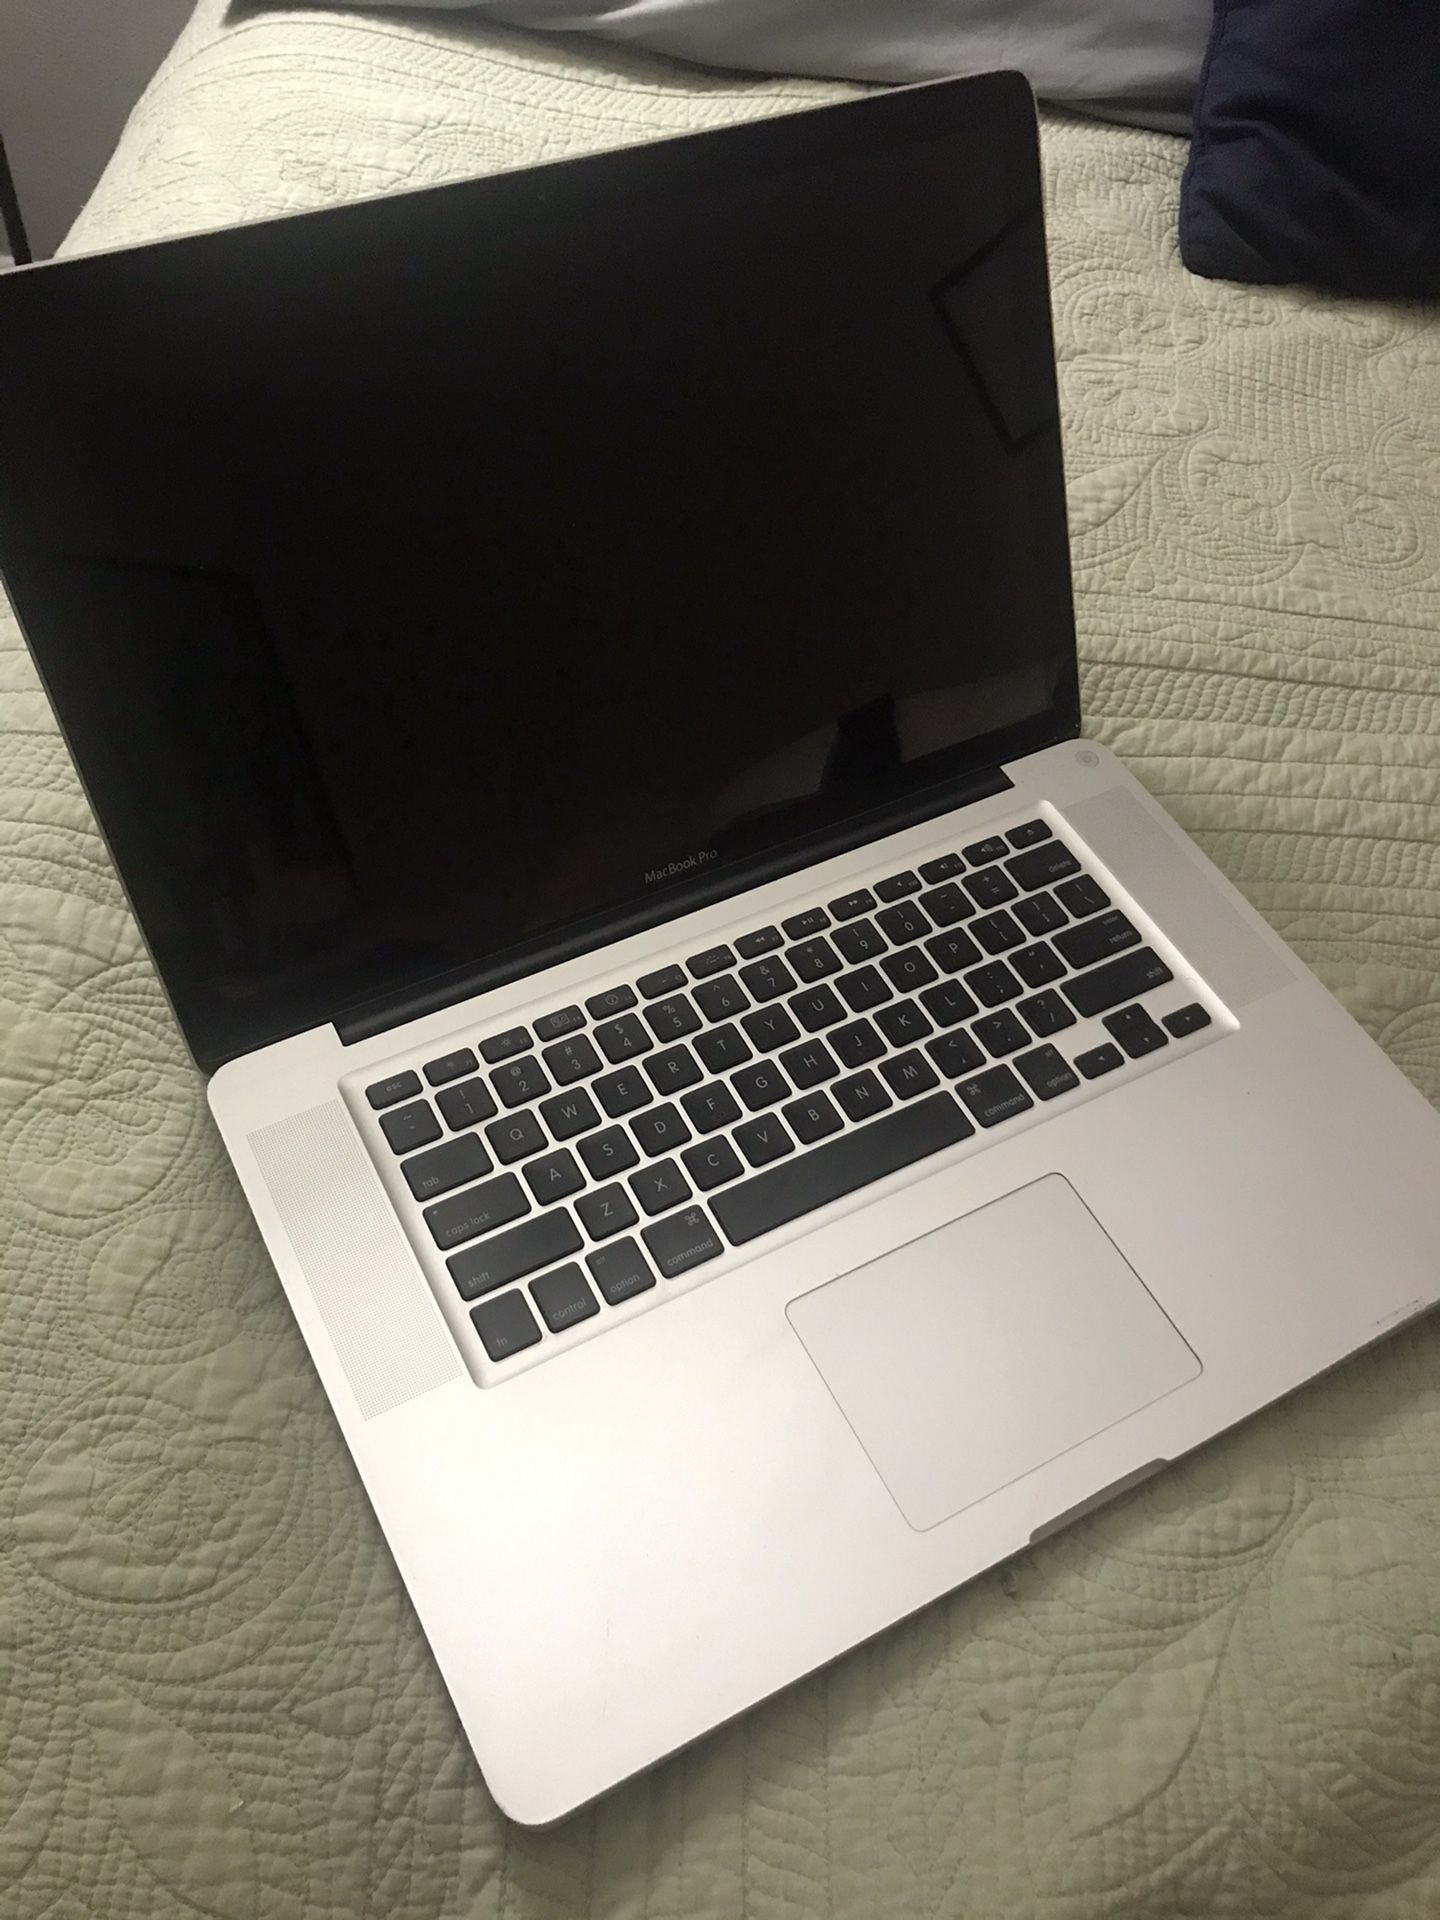 Macbook Pro (15-inch, Mid-2010)